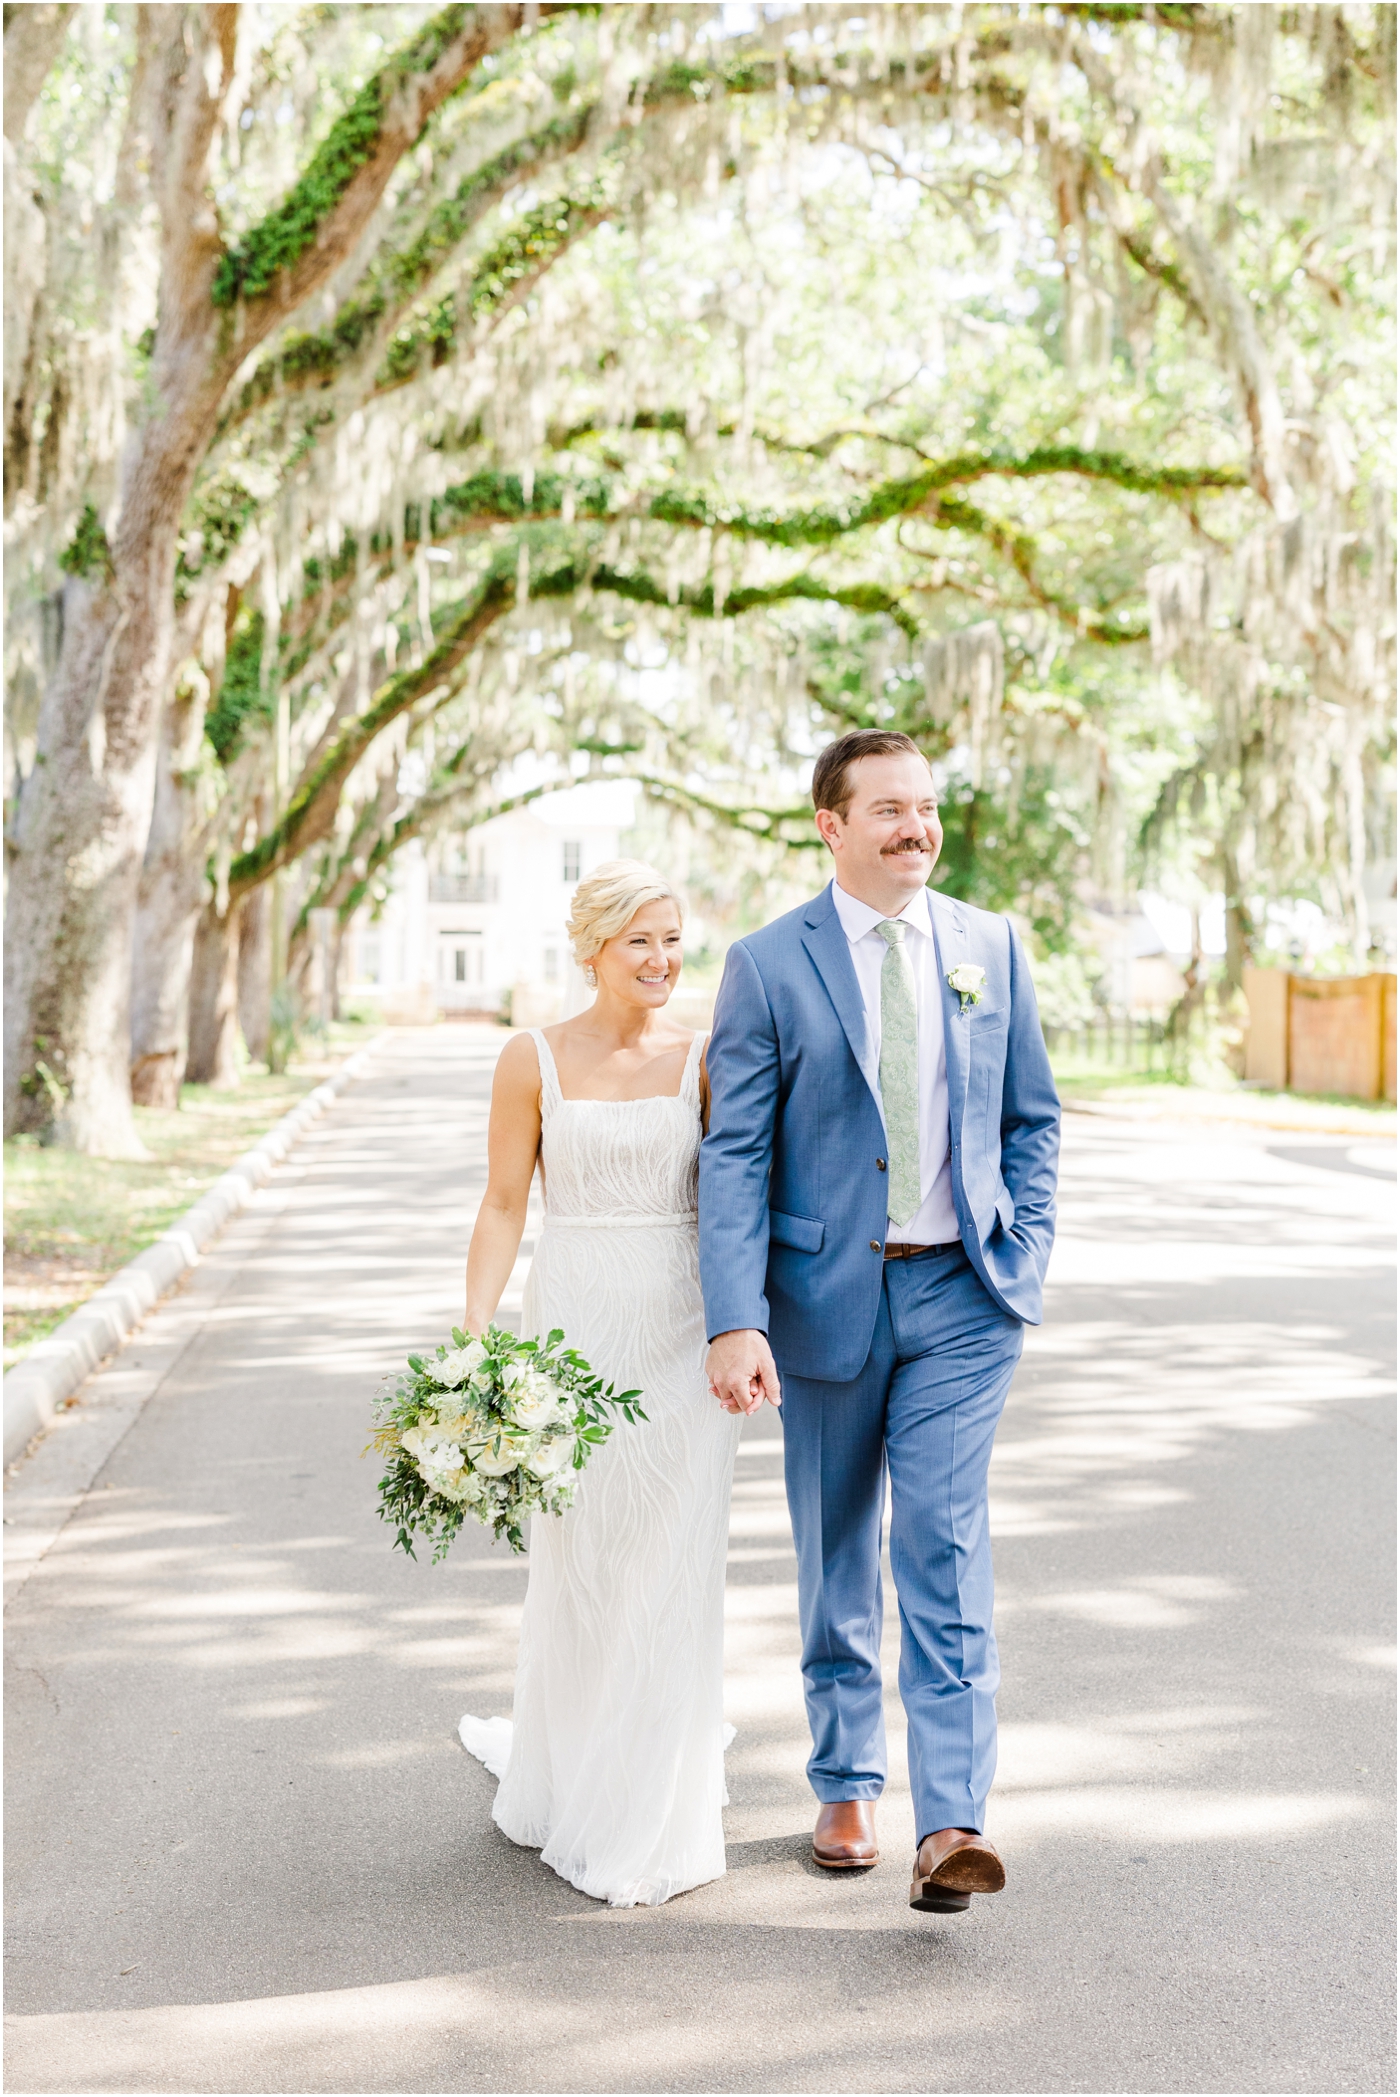 Bride & Groom wedding photos on Magnolia Street St Augustine | St Augustine Florida Wedding Photographer